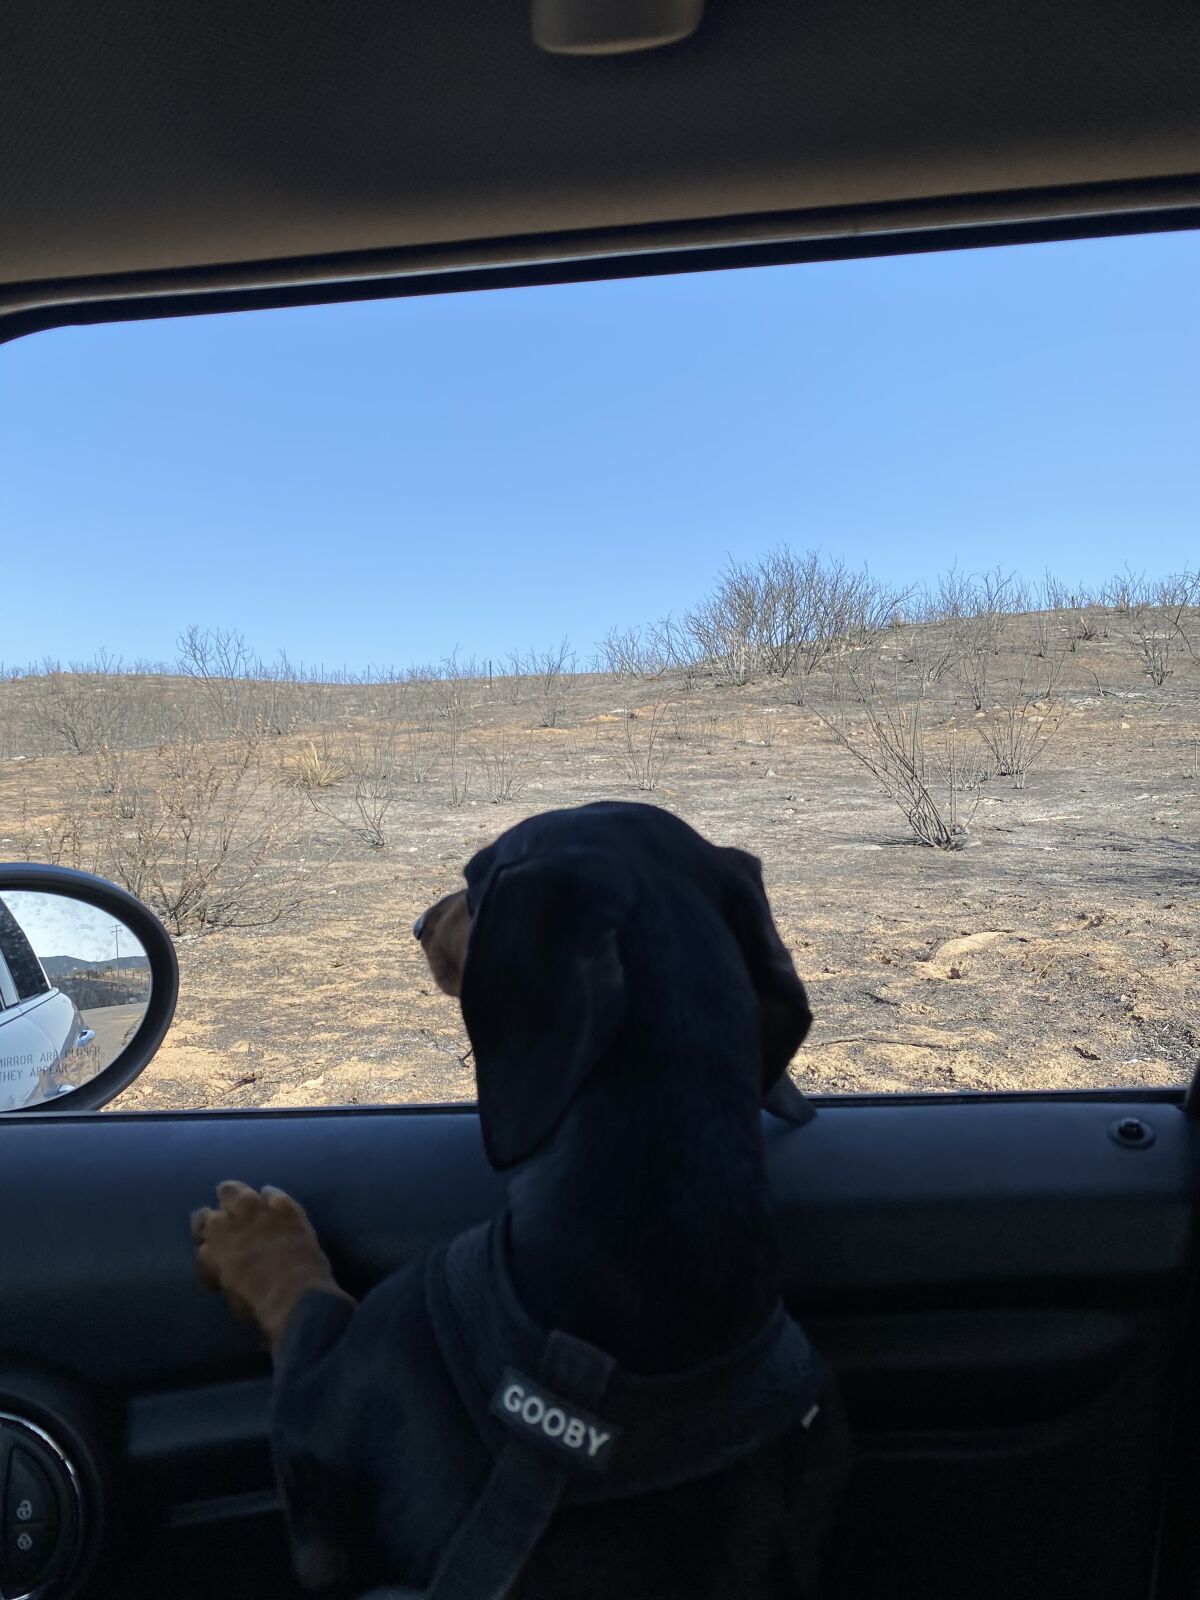 Romeo, a city-dwelling dachshund riding in a car